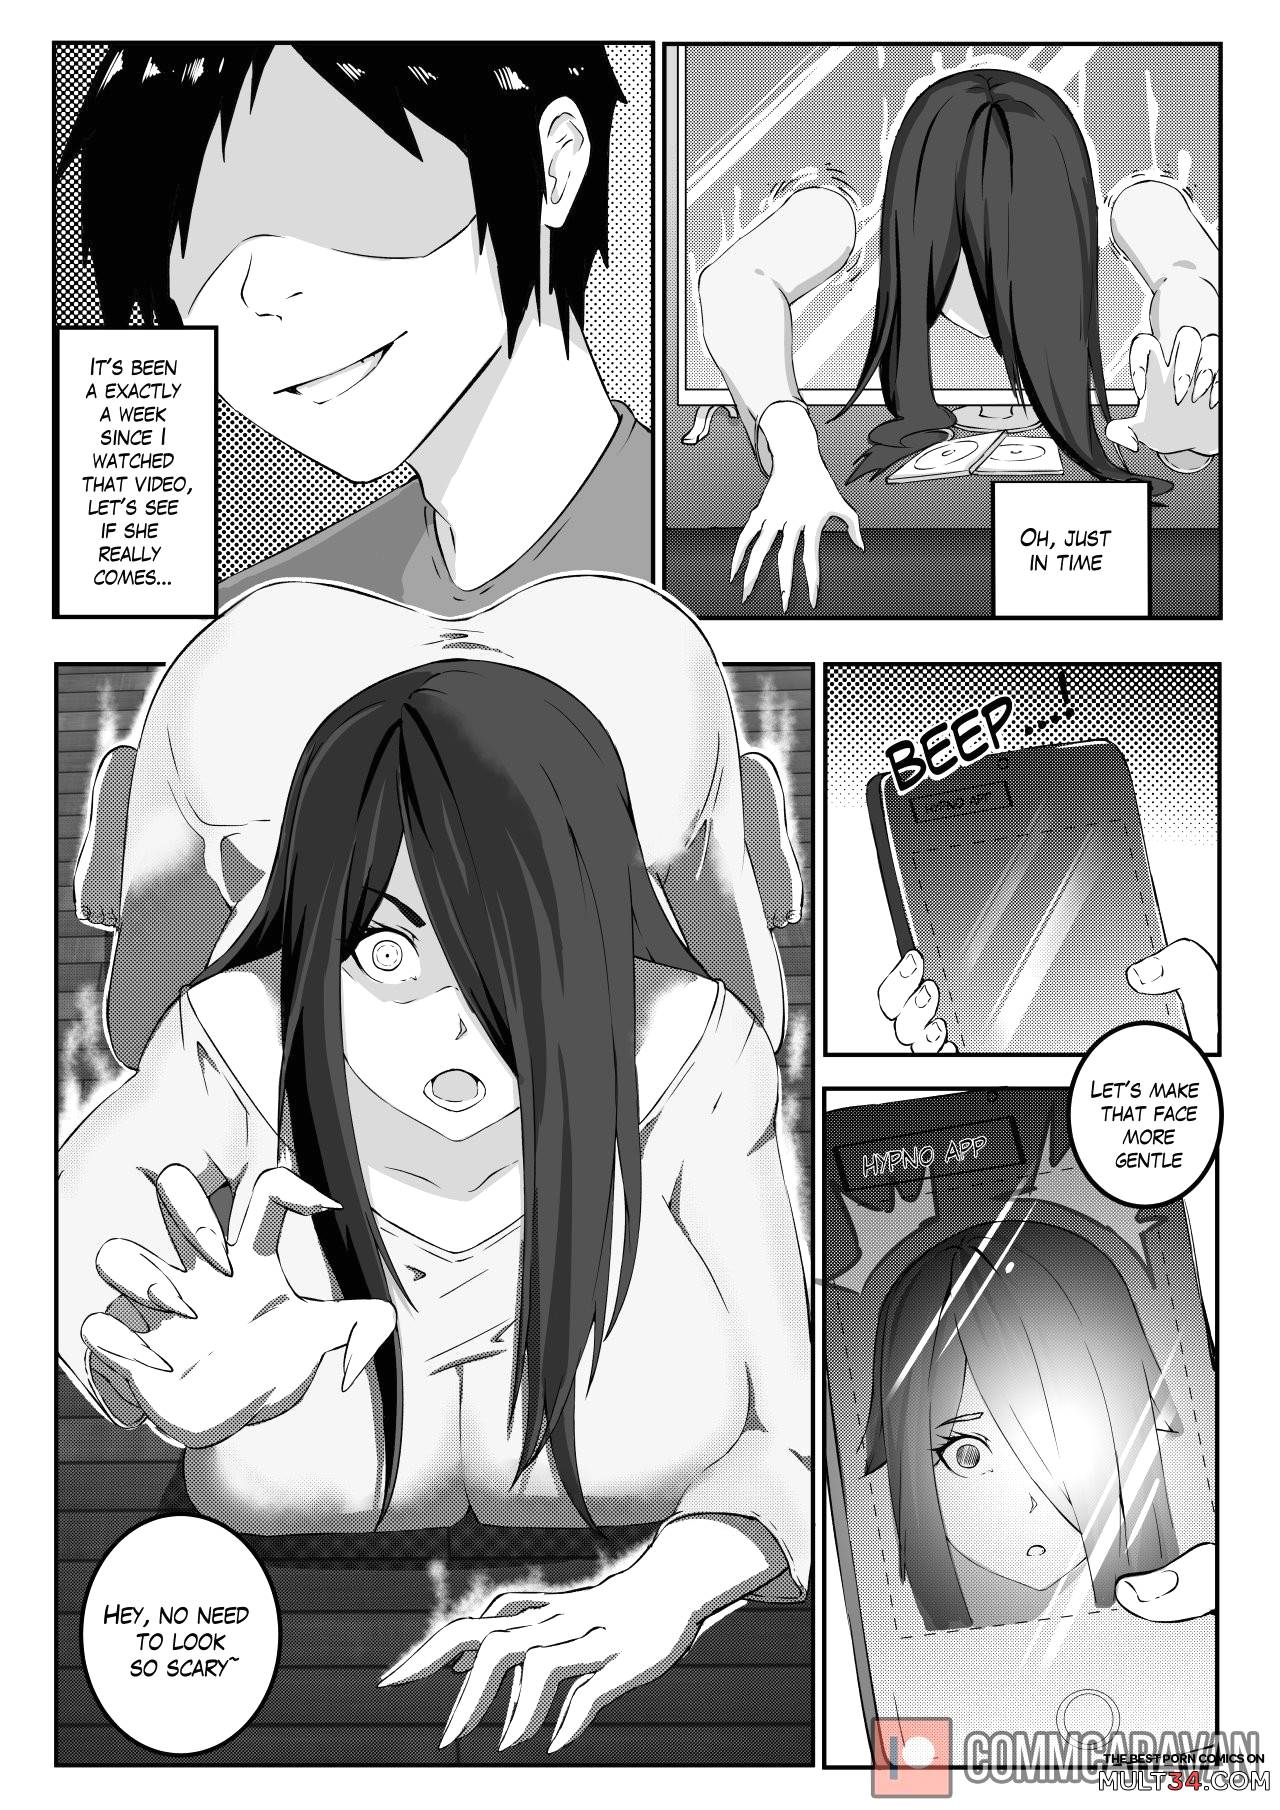 Sadako Hypno'd page 1